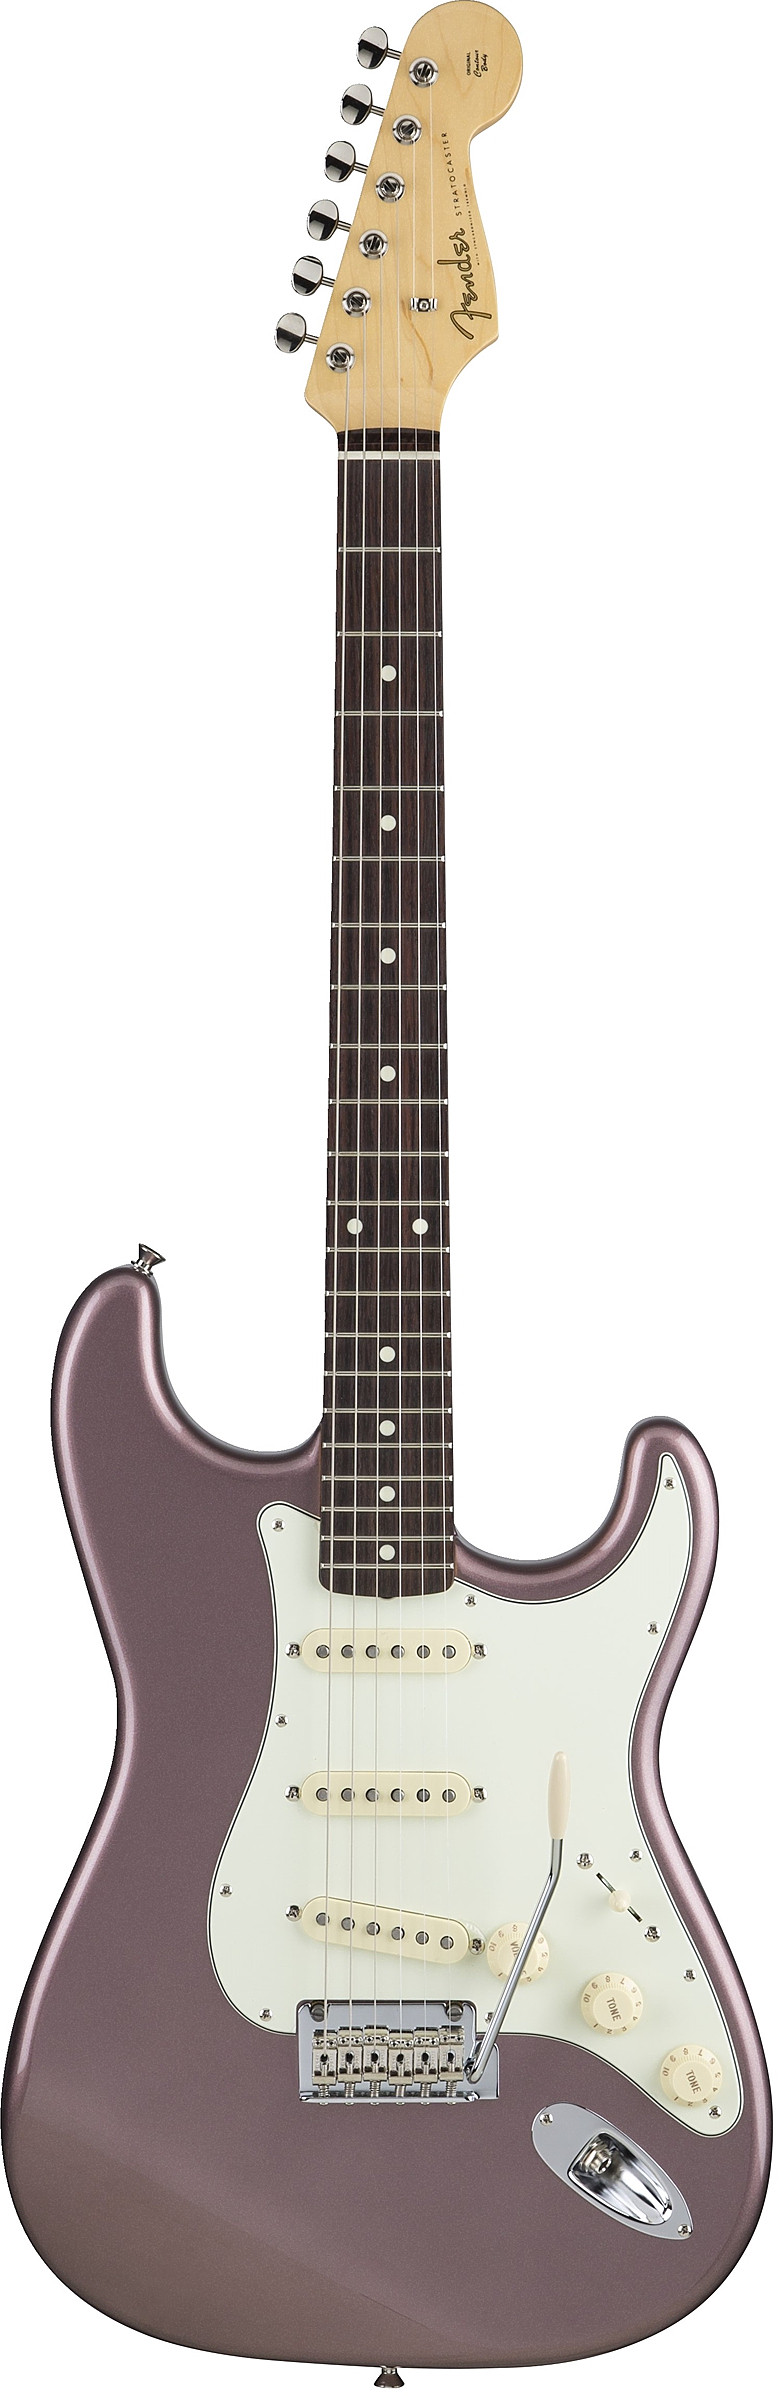 Fender Made In Japan Hybrid 60s Stratocaster Review Chorder Com